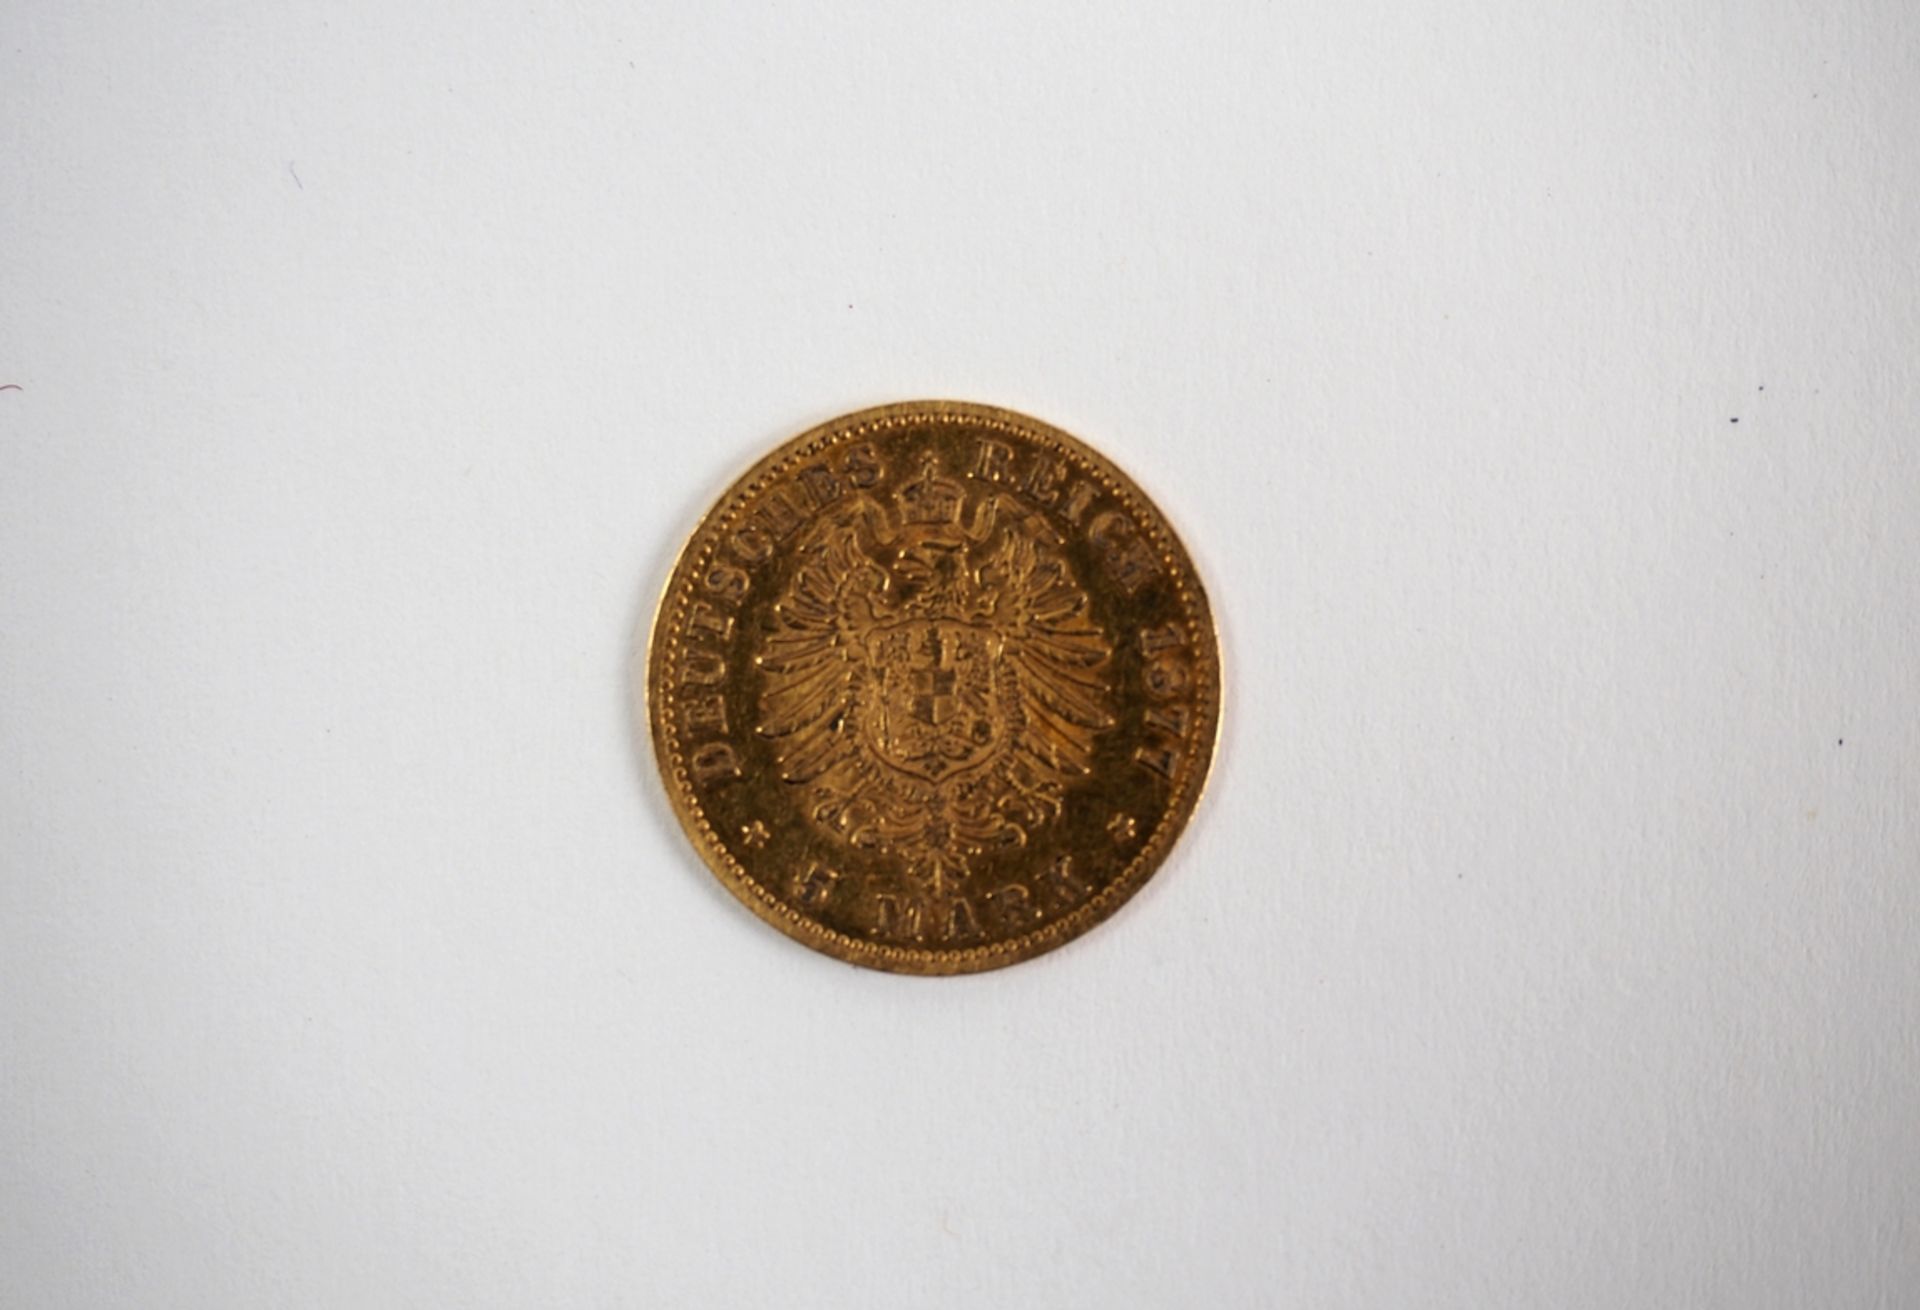 Preussen: 5 Mark - 1877 GOLD. - Image 2 of 2